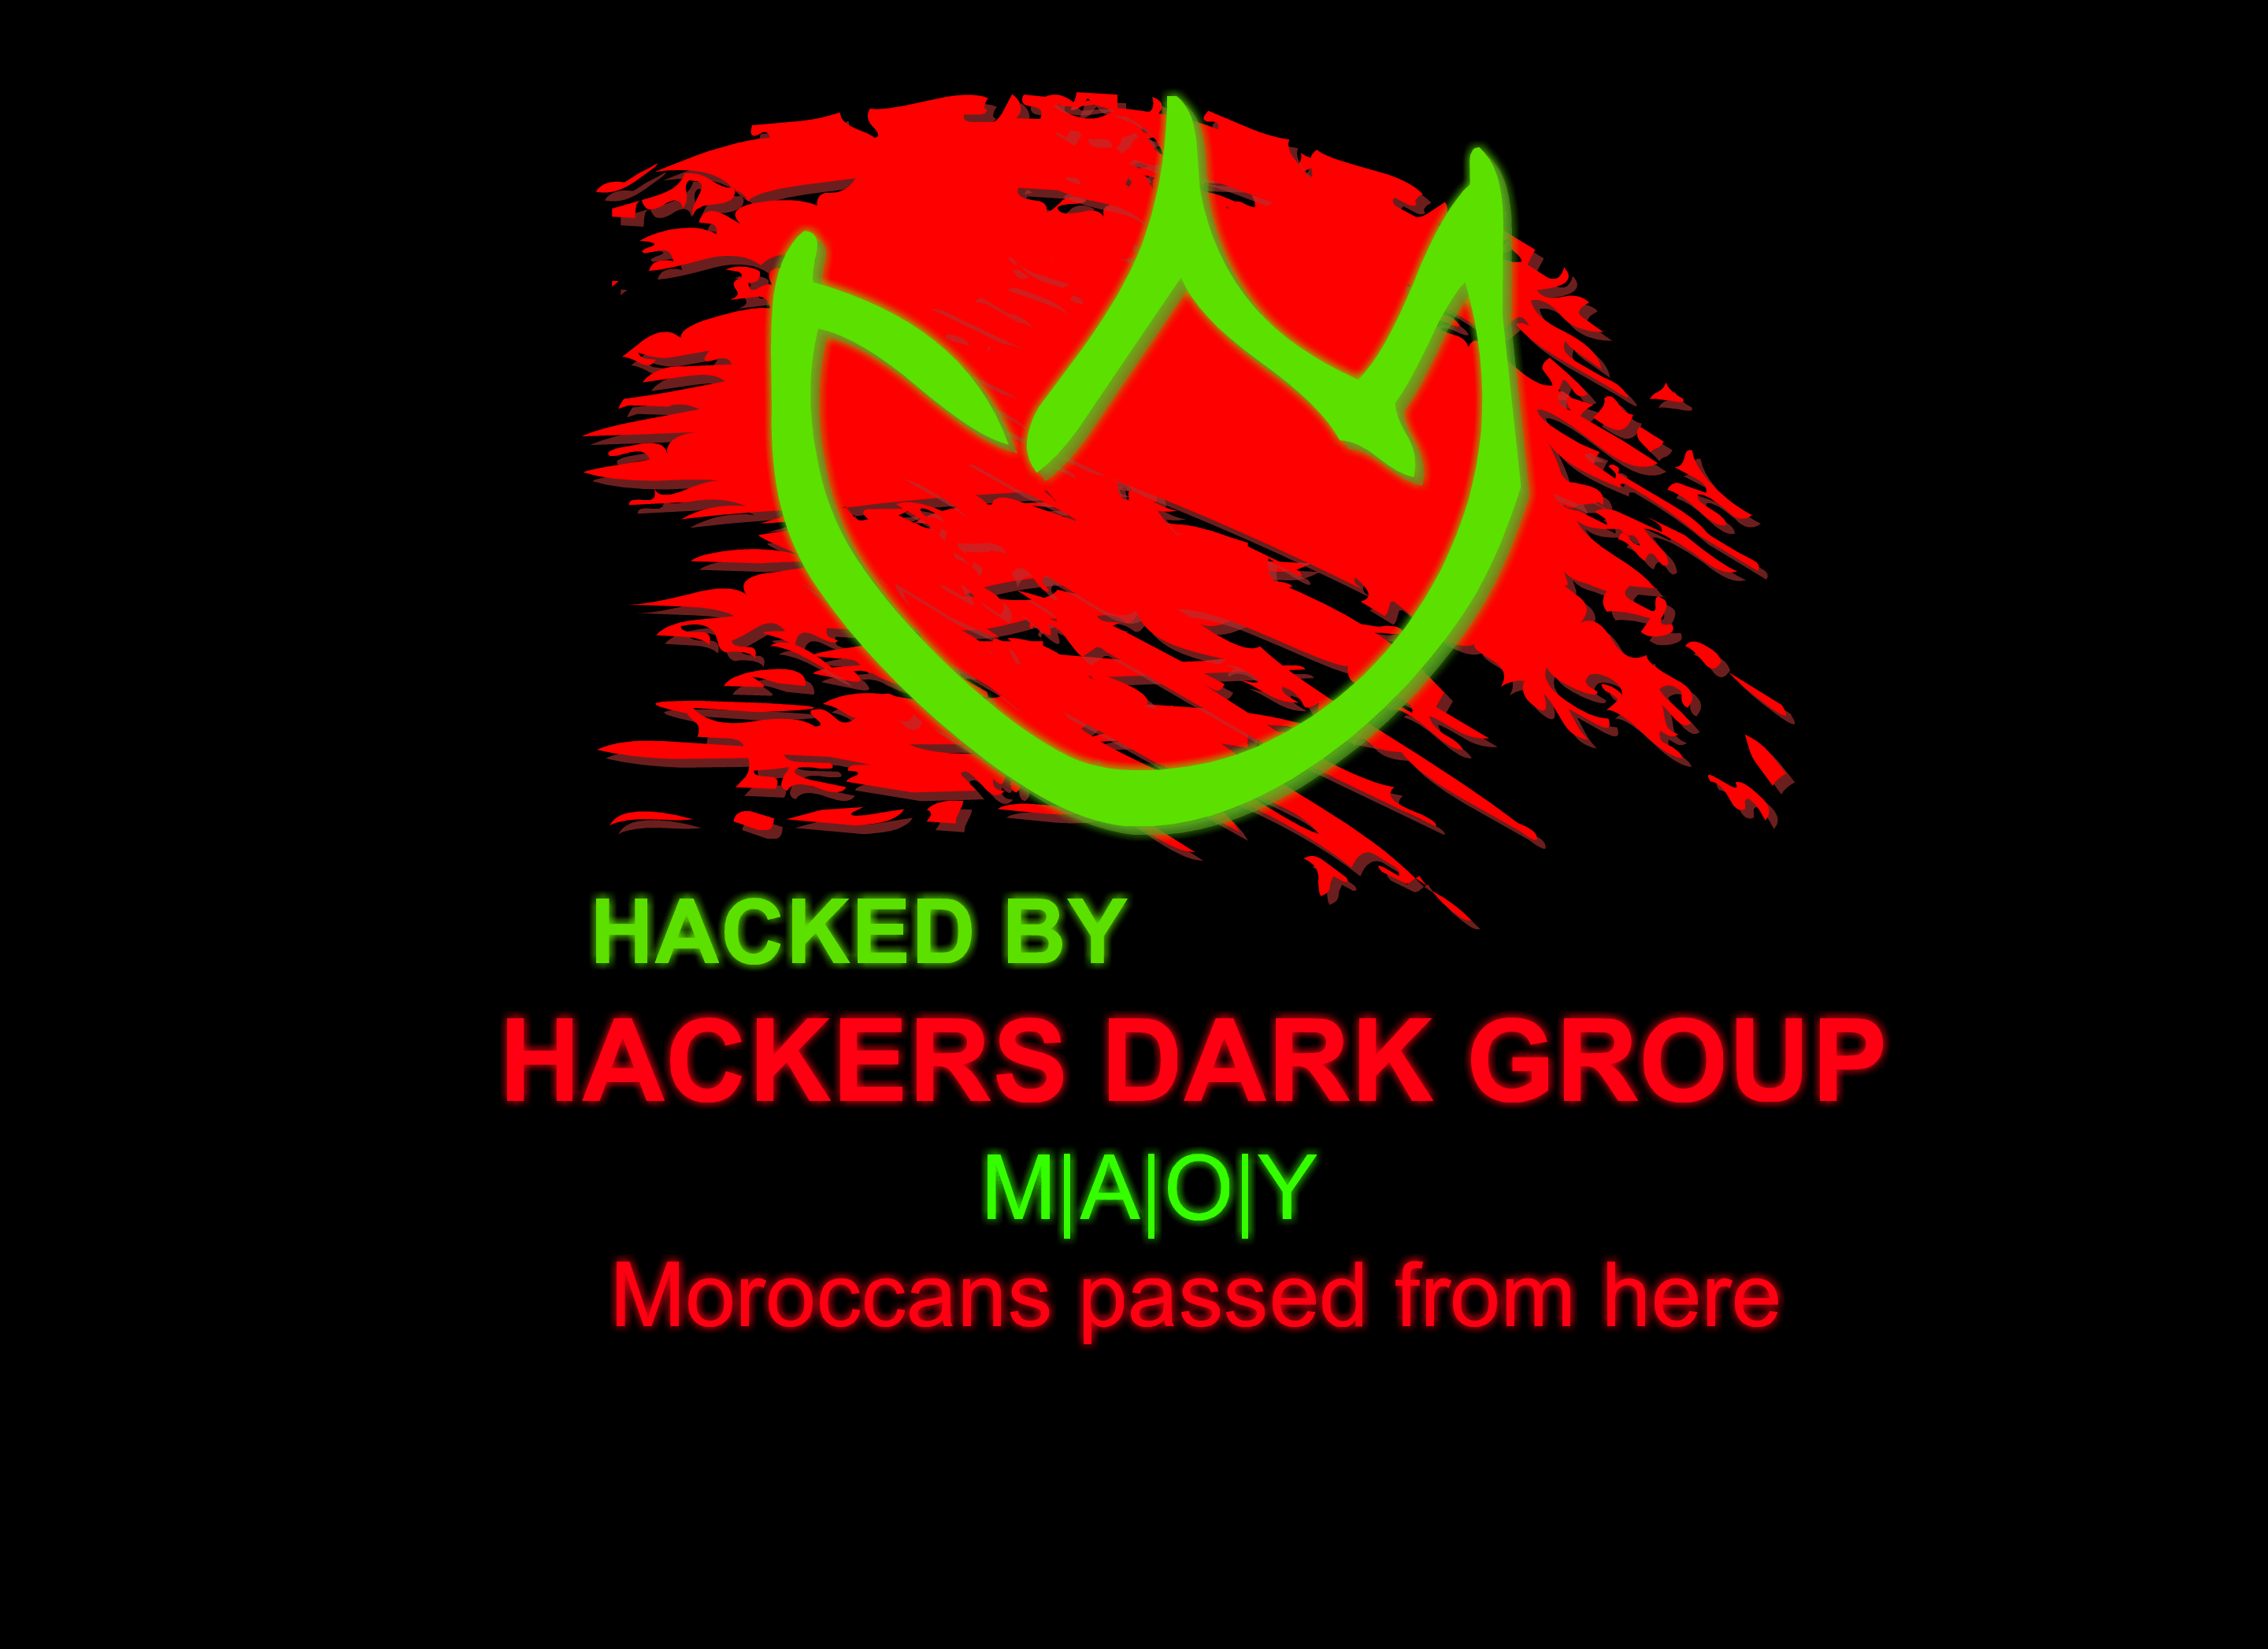 Moroccan_Hackers_Team.gif - 262.97 KB